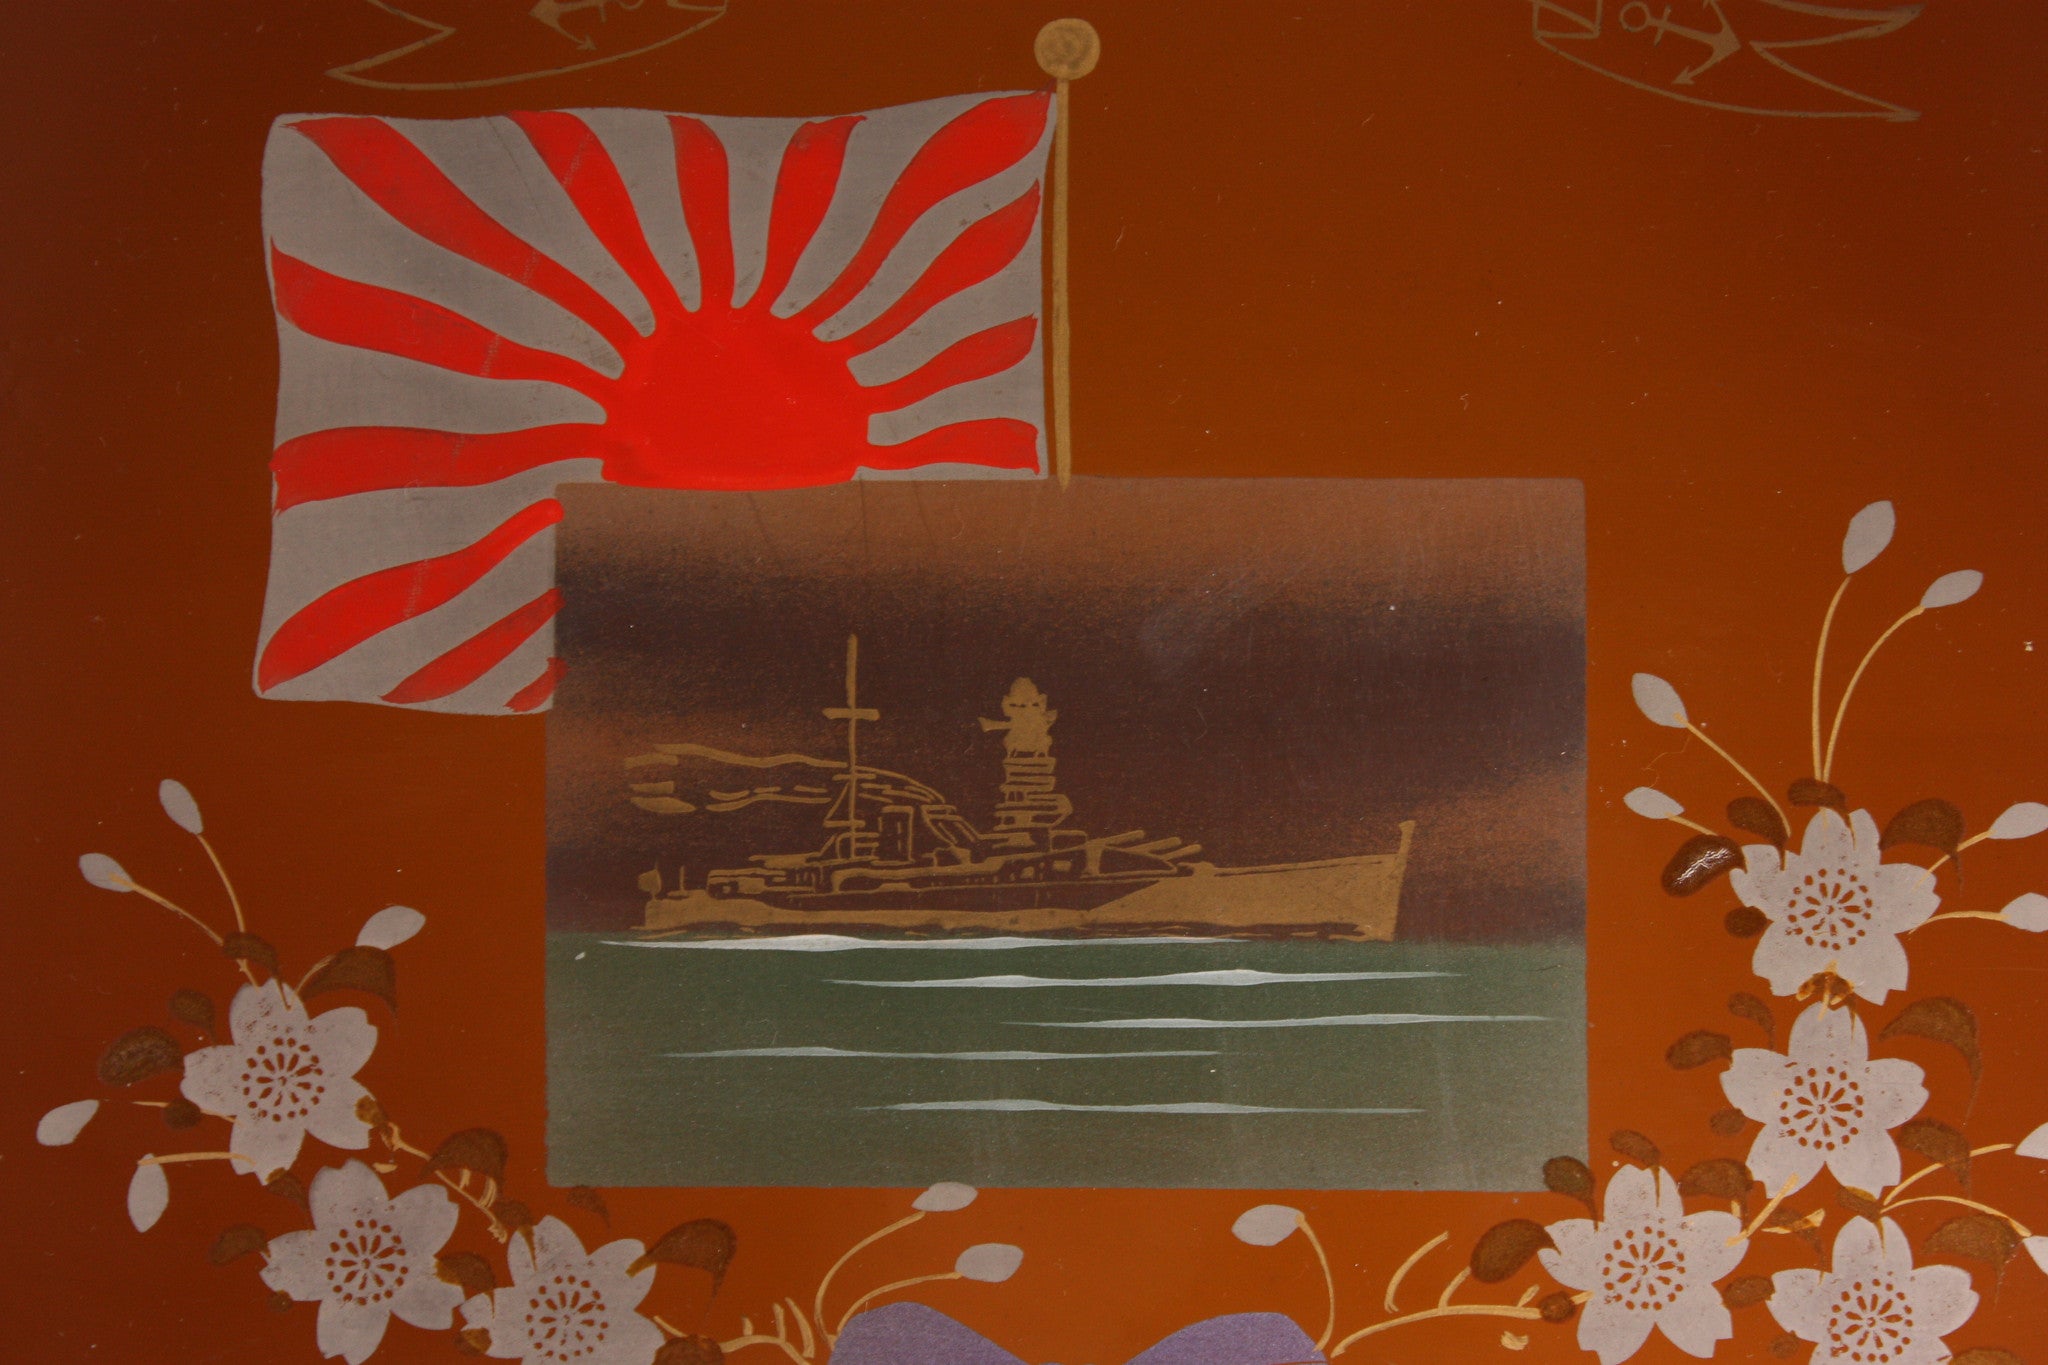 Antique Japanese WW2 Battleship Nagato Navy Commemoration Lacquer Tray